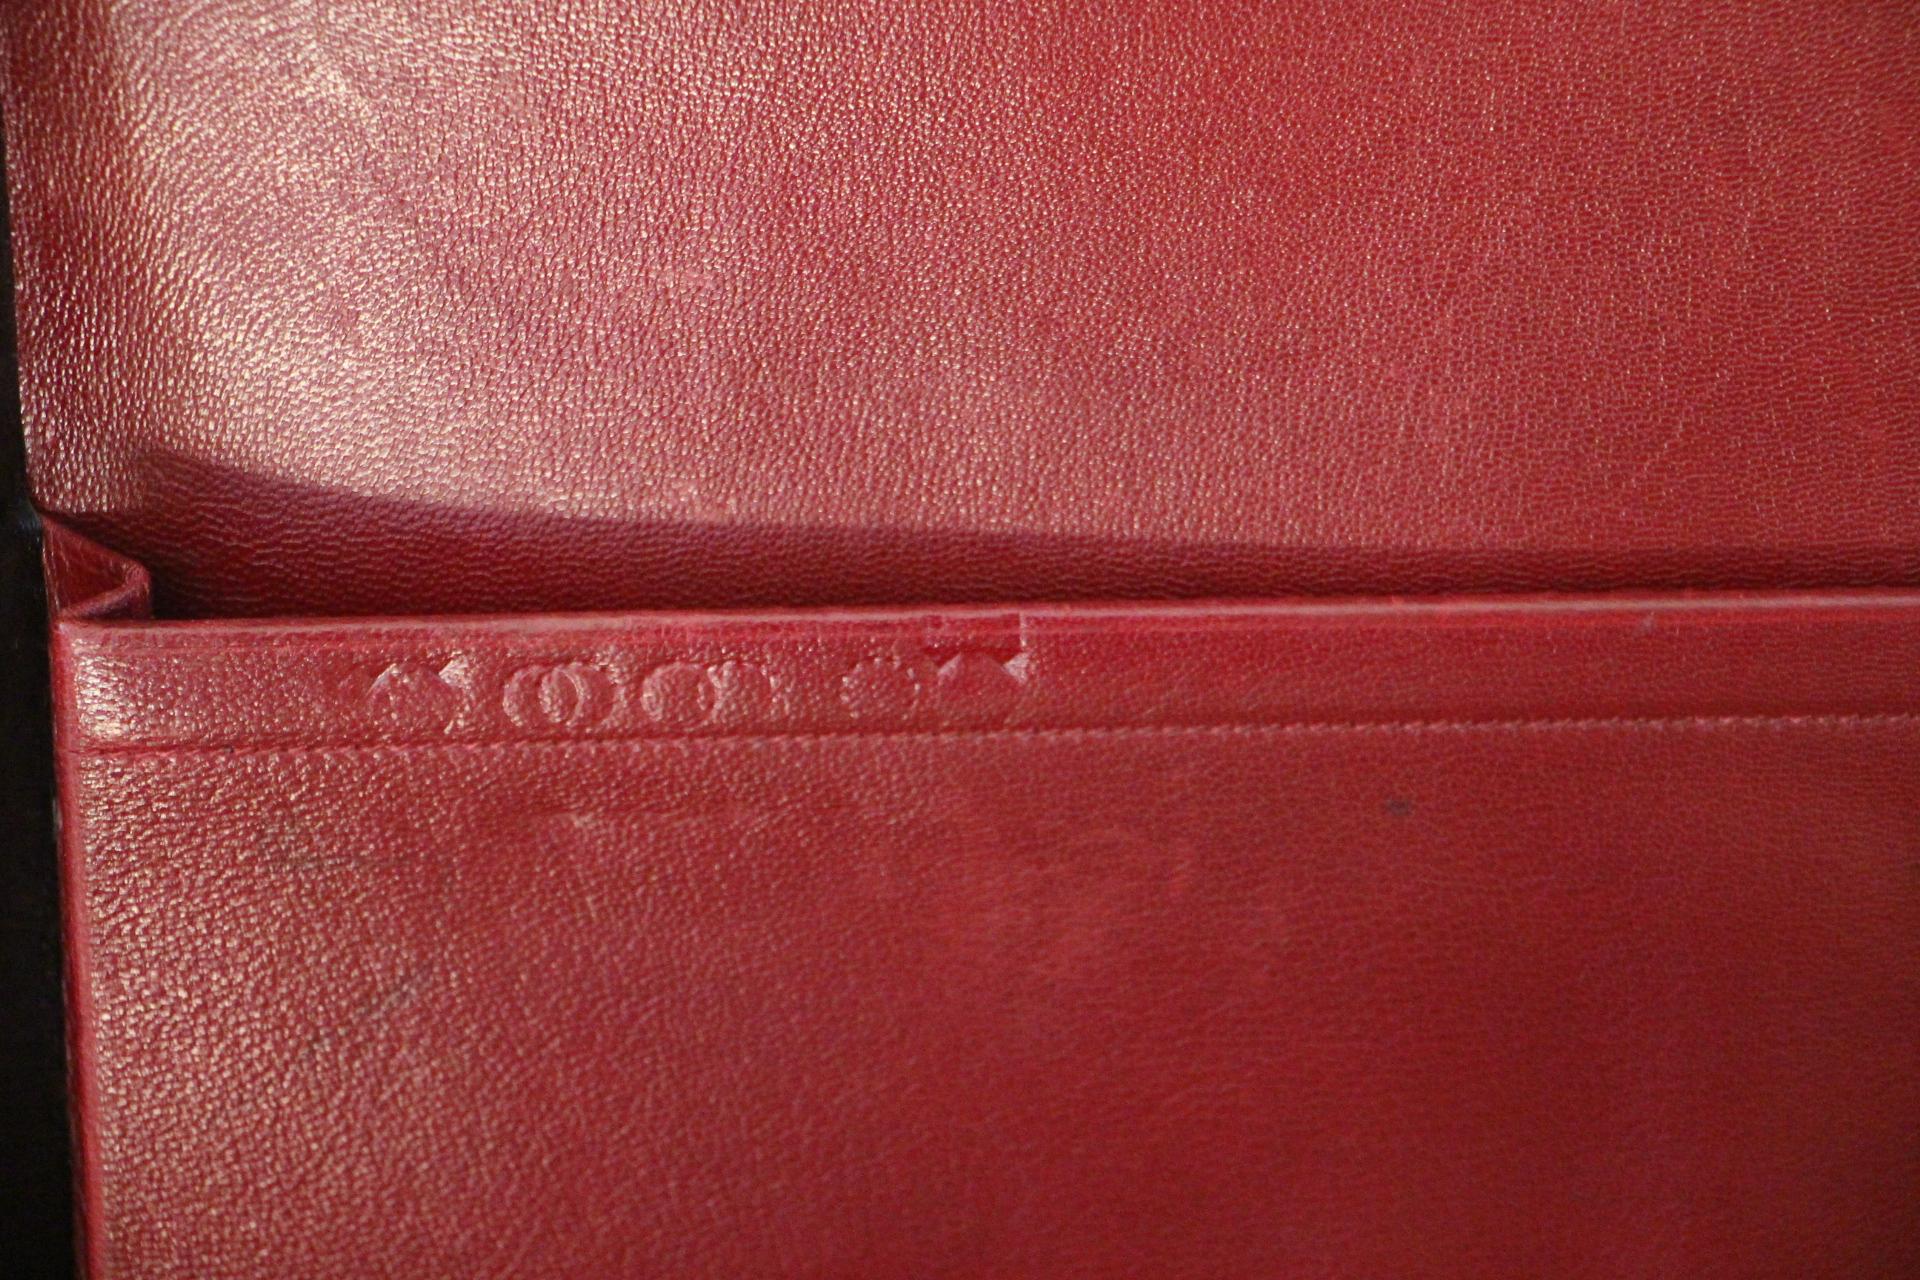 Hermès Black Leather Briefcase, Hermes Attache, Hermes Bag 6